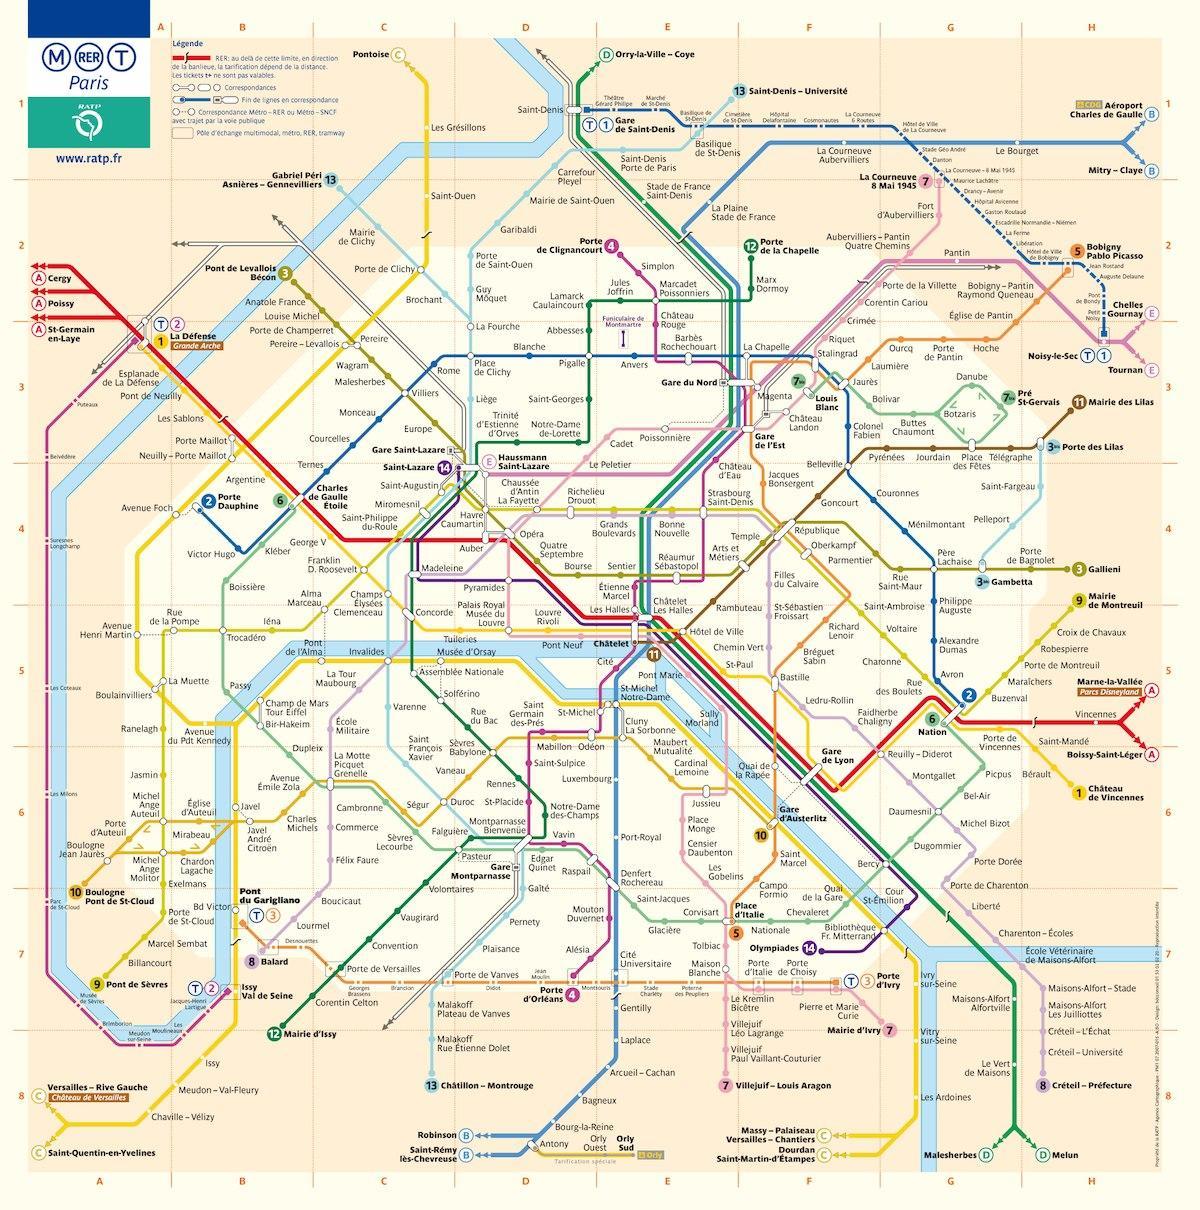 washington dc metro mapu s uliciach